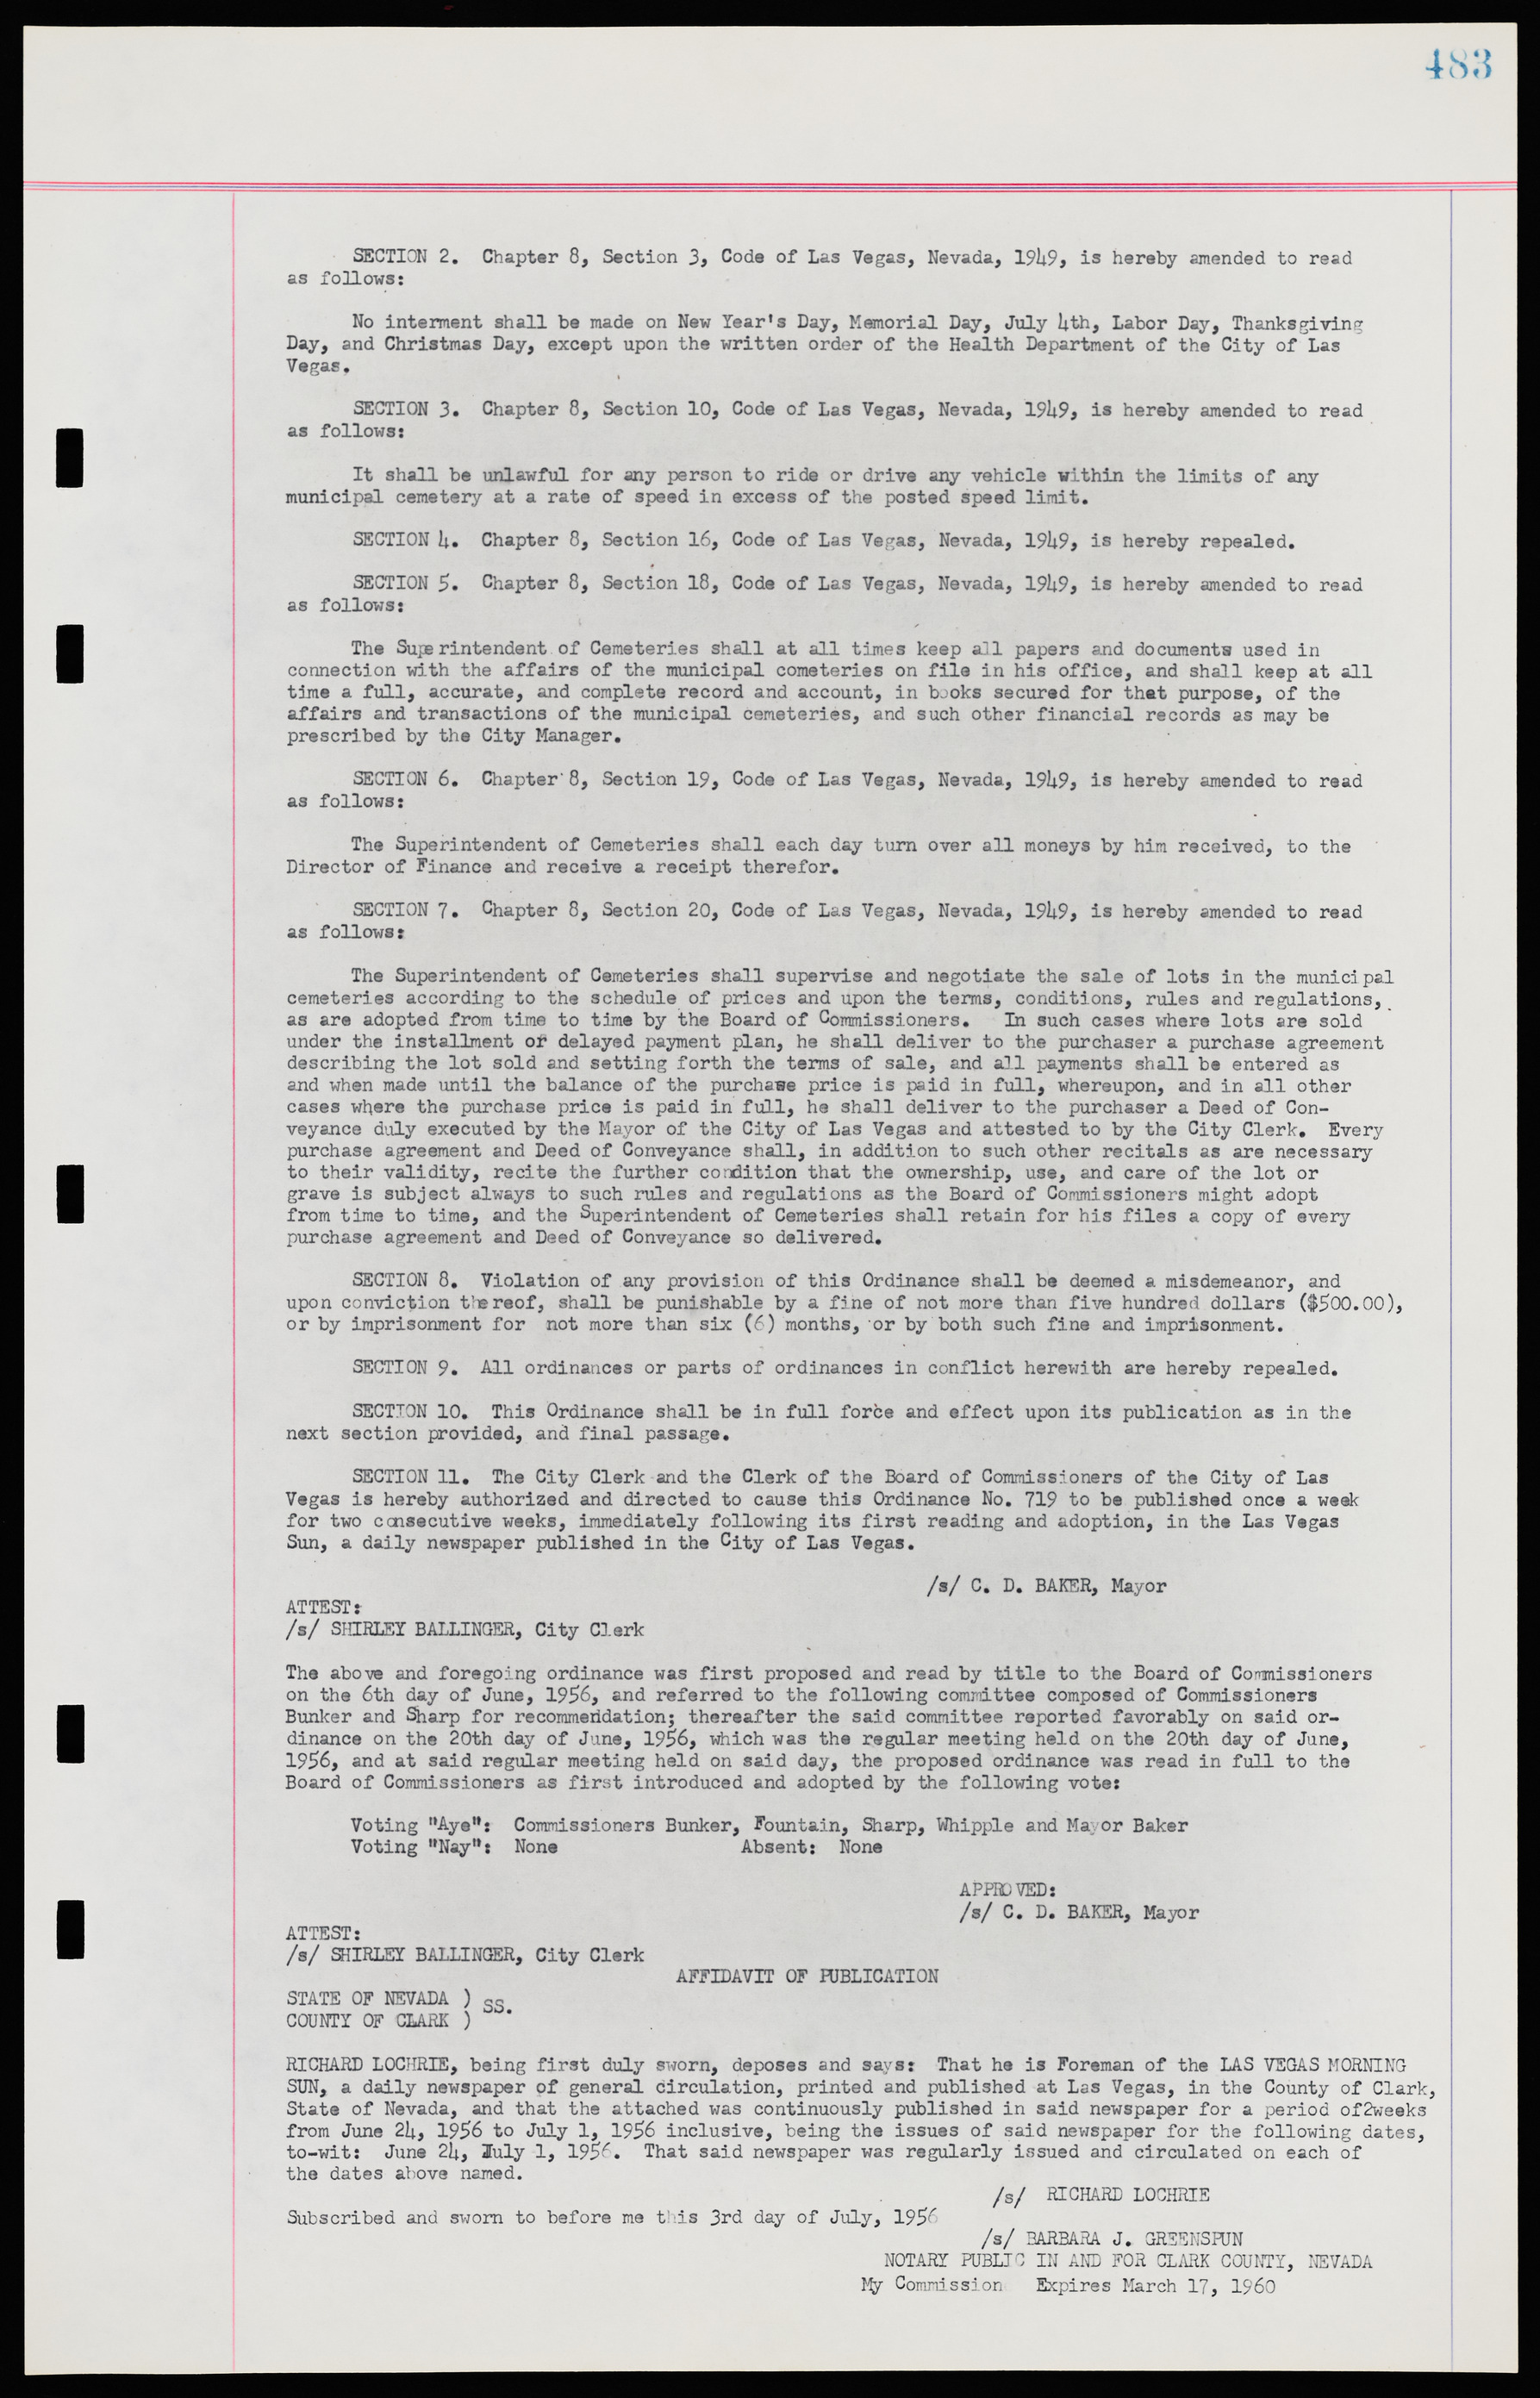 Las Vegas City Ordinances, November 13, 1950 to August 6, 1958, lvc000015-491